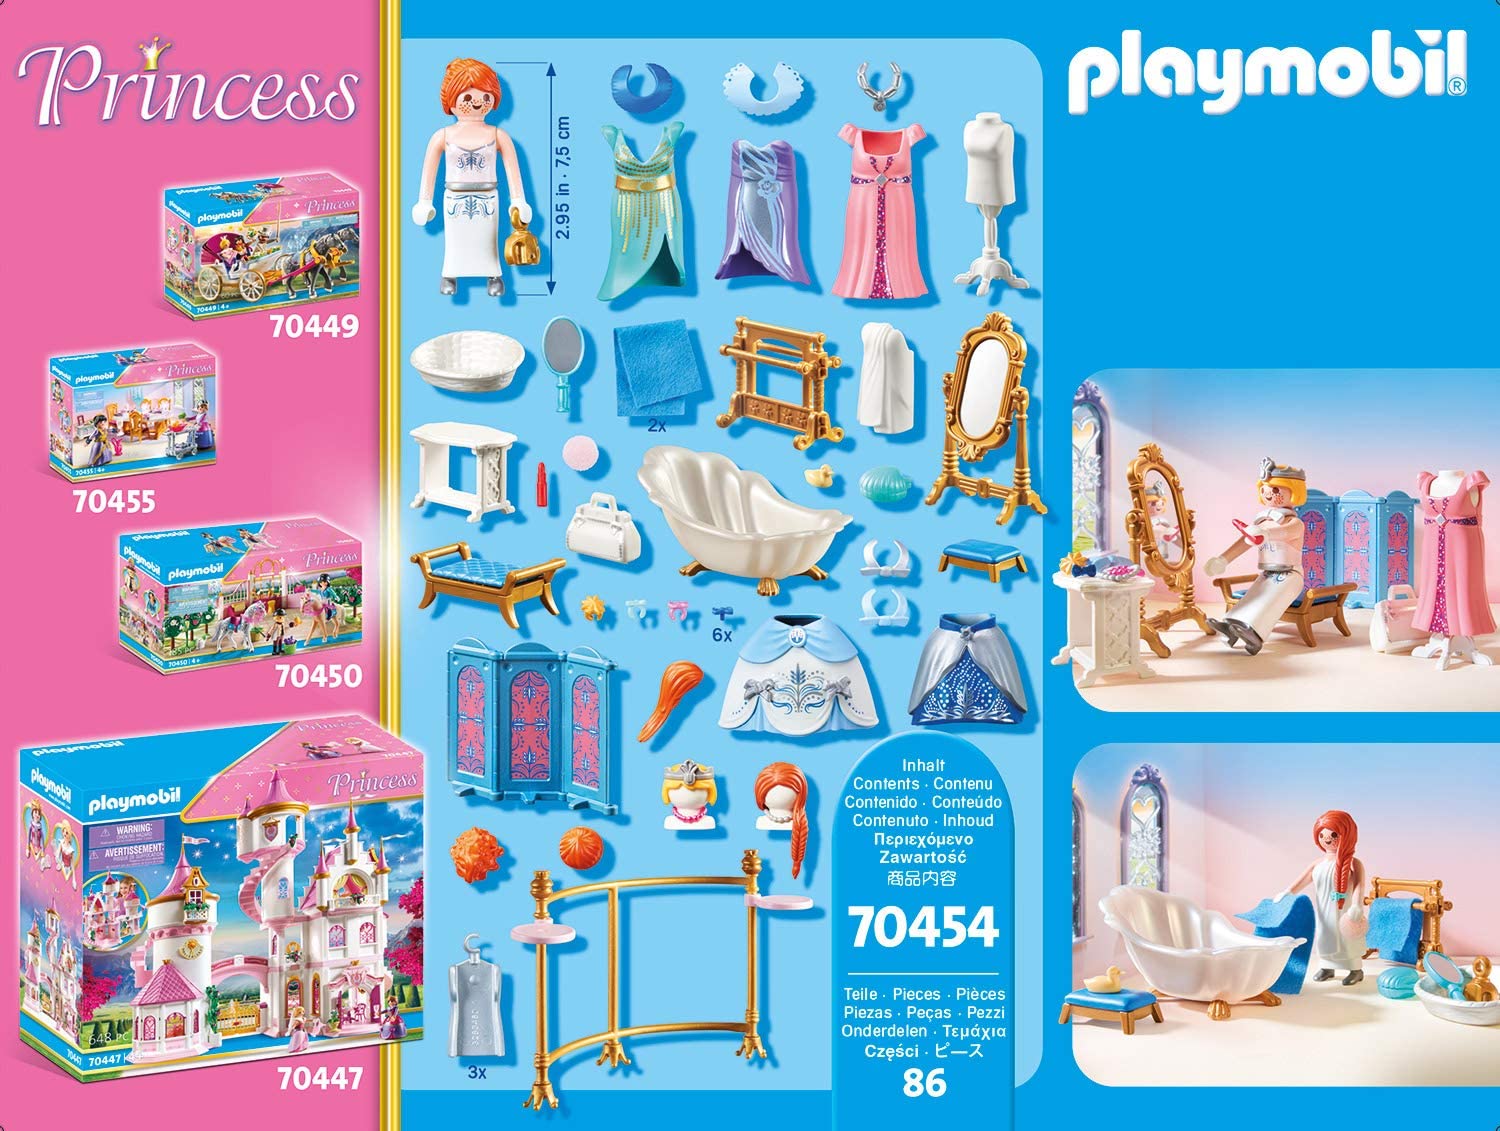 PLAYMOBIL PRINCESS - SALLE DE BAIN ROYALE AVEC DRESSING #70454 - PLAYMOBIL  / Princess